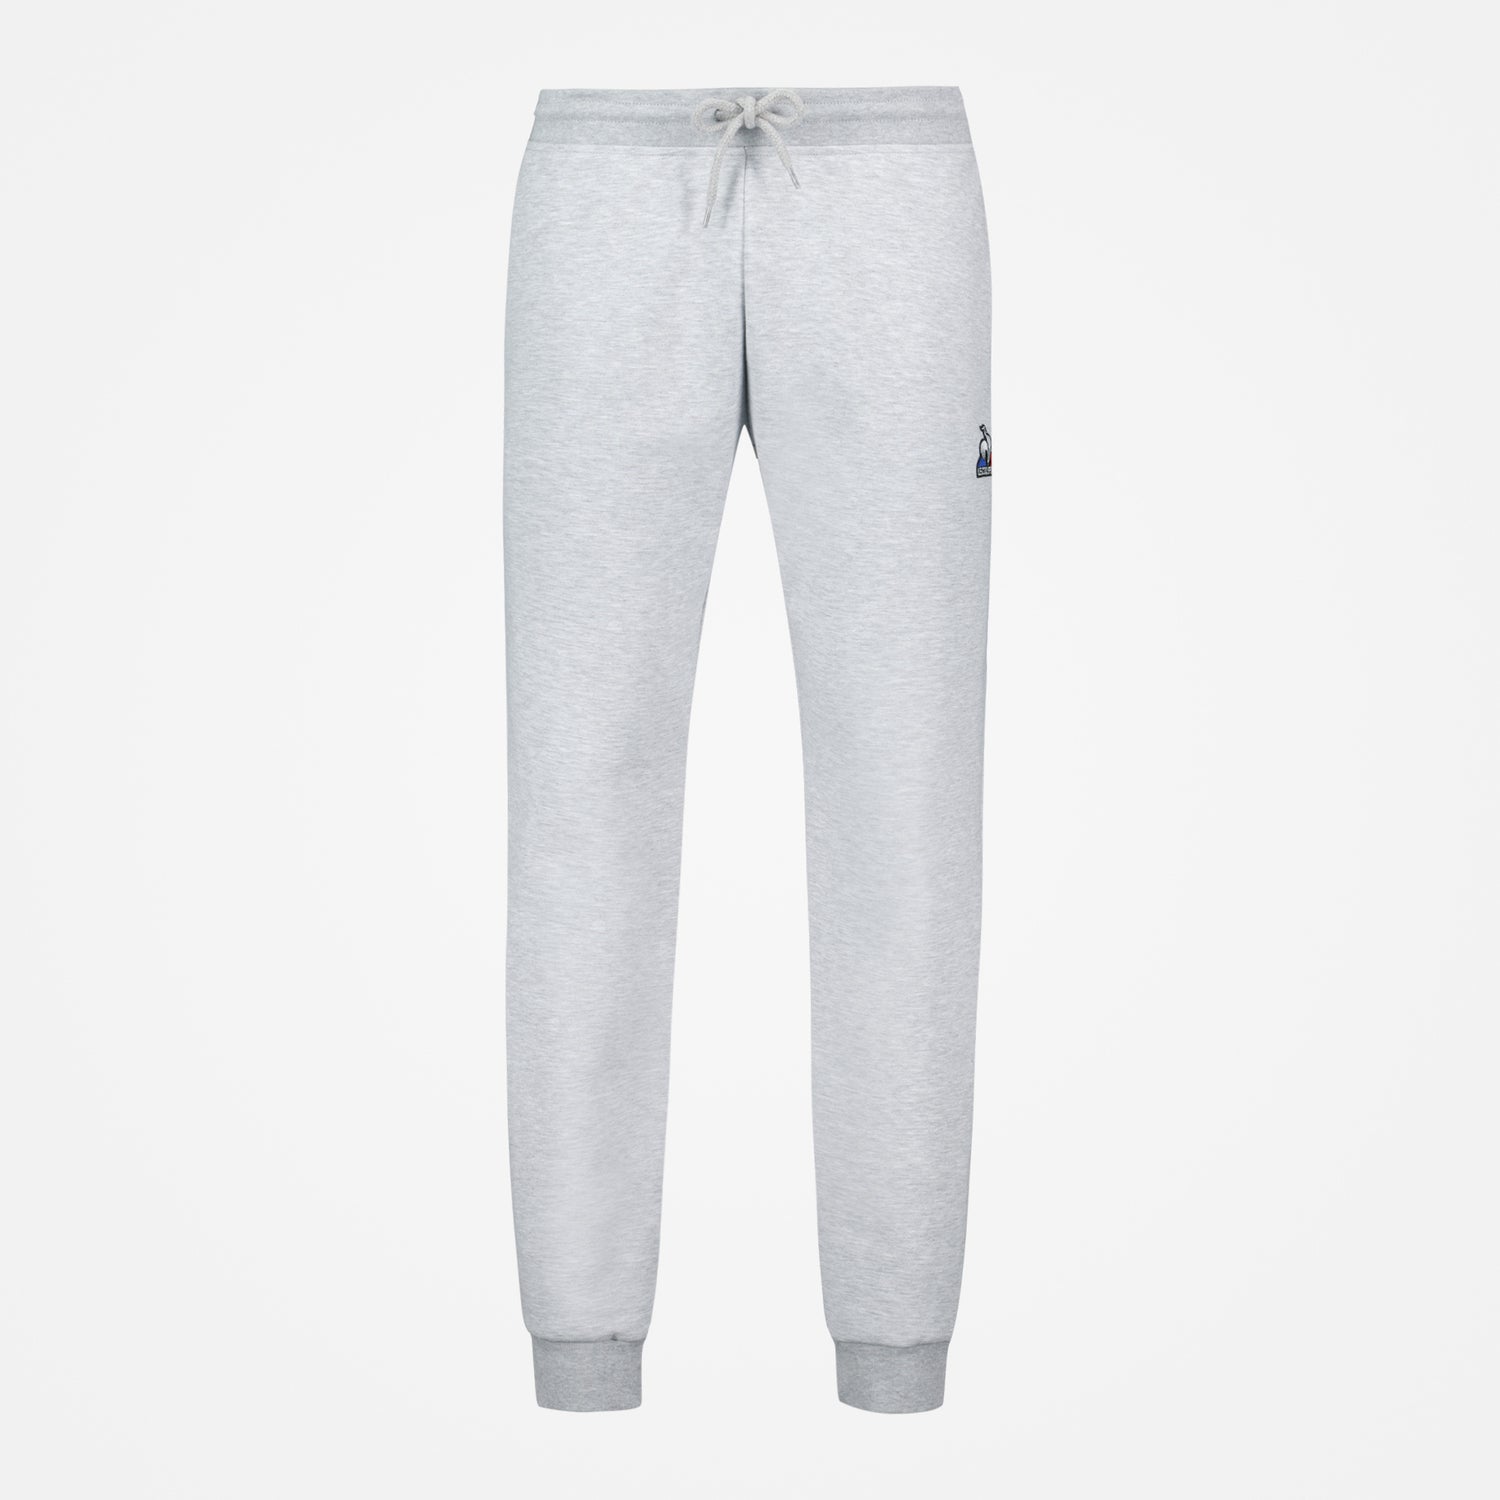 2310570-ESS Pant Regular N°4 M gris chiné clair  | Trousers Regular for men